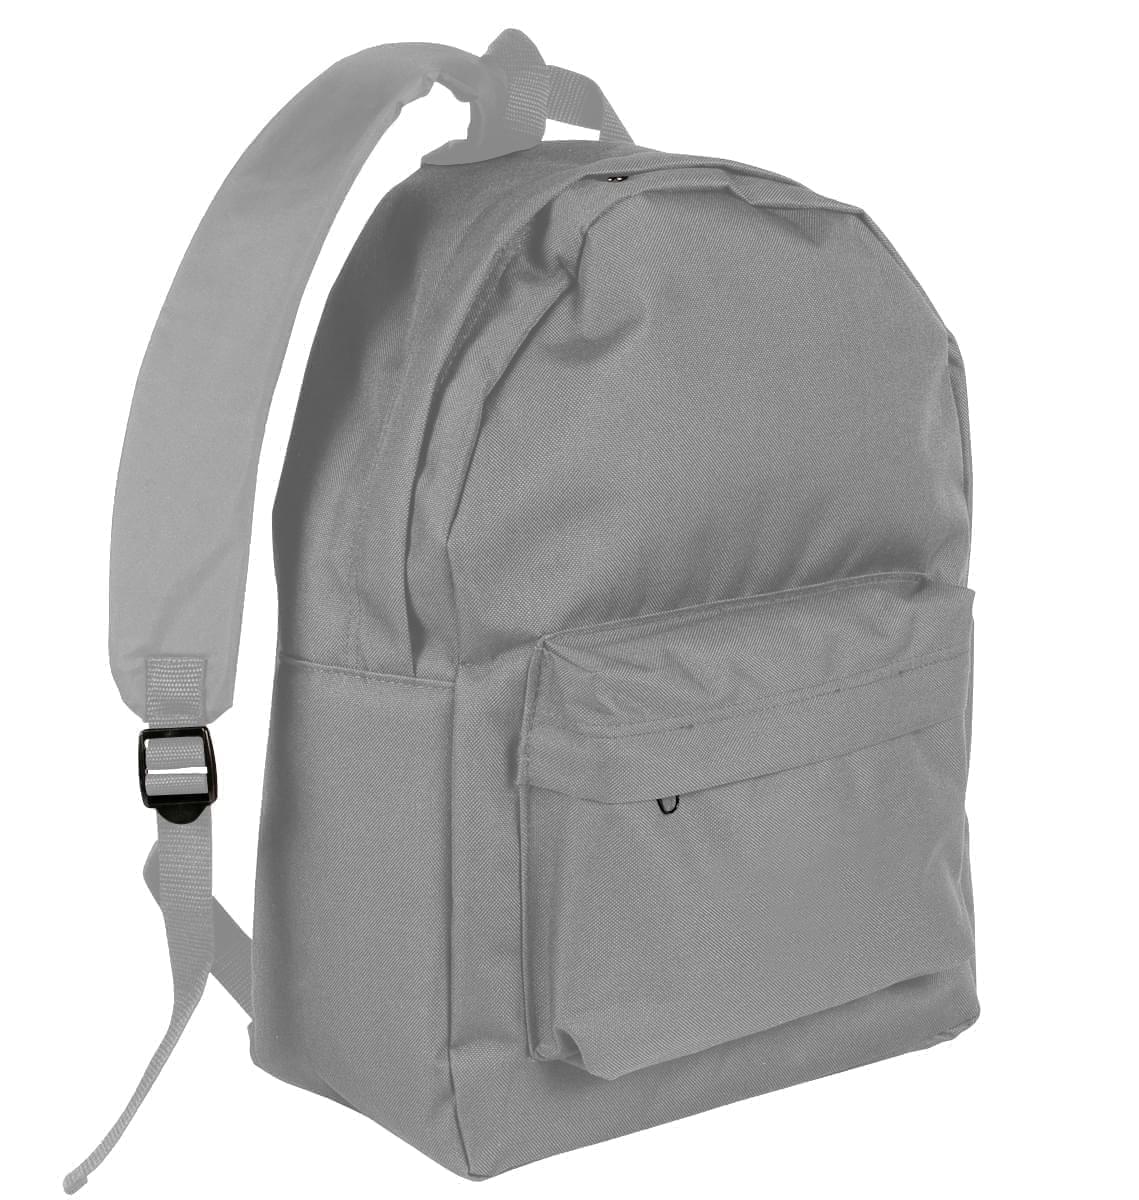 USA Made Nylon Poly Backpack Knapsacks, Grey-Grey, 8960-A1U